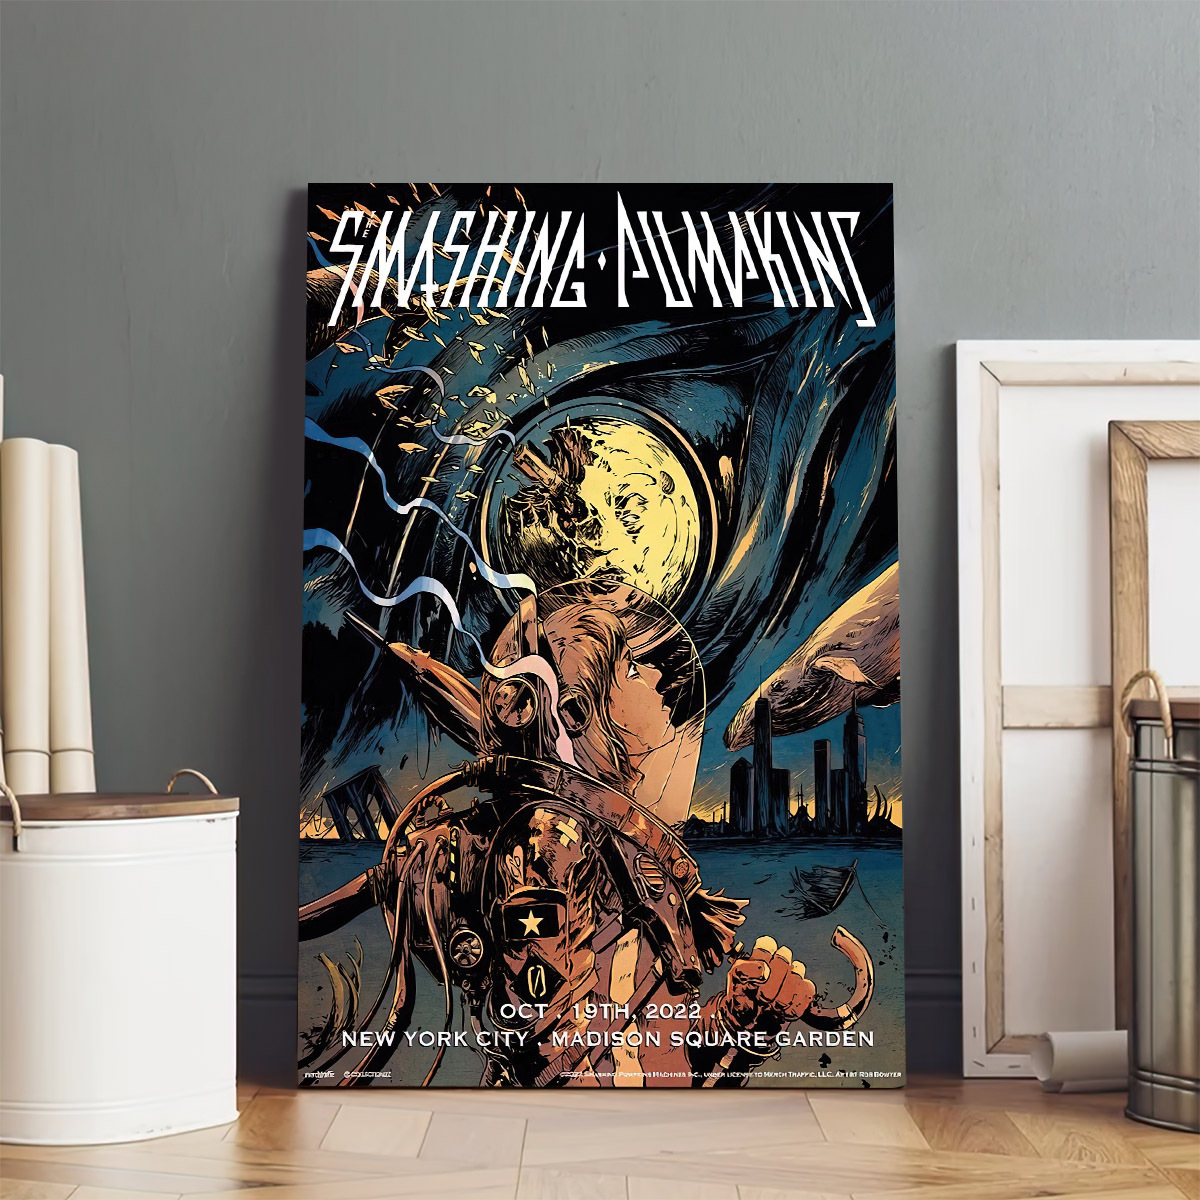 The Smashingpumpkins Tour 2022 New York City Madison Square Garden Poster Canvas